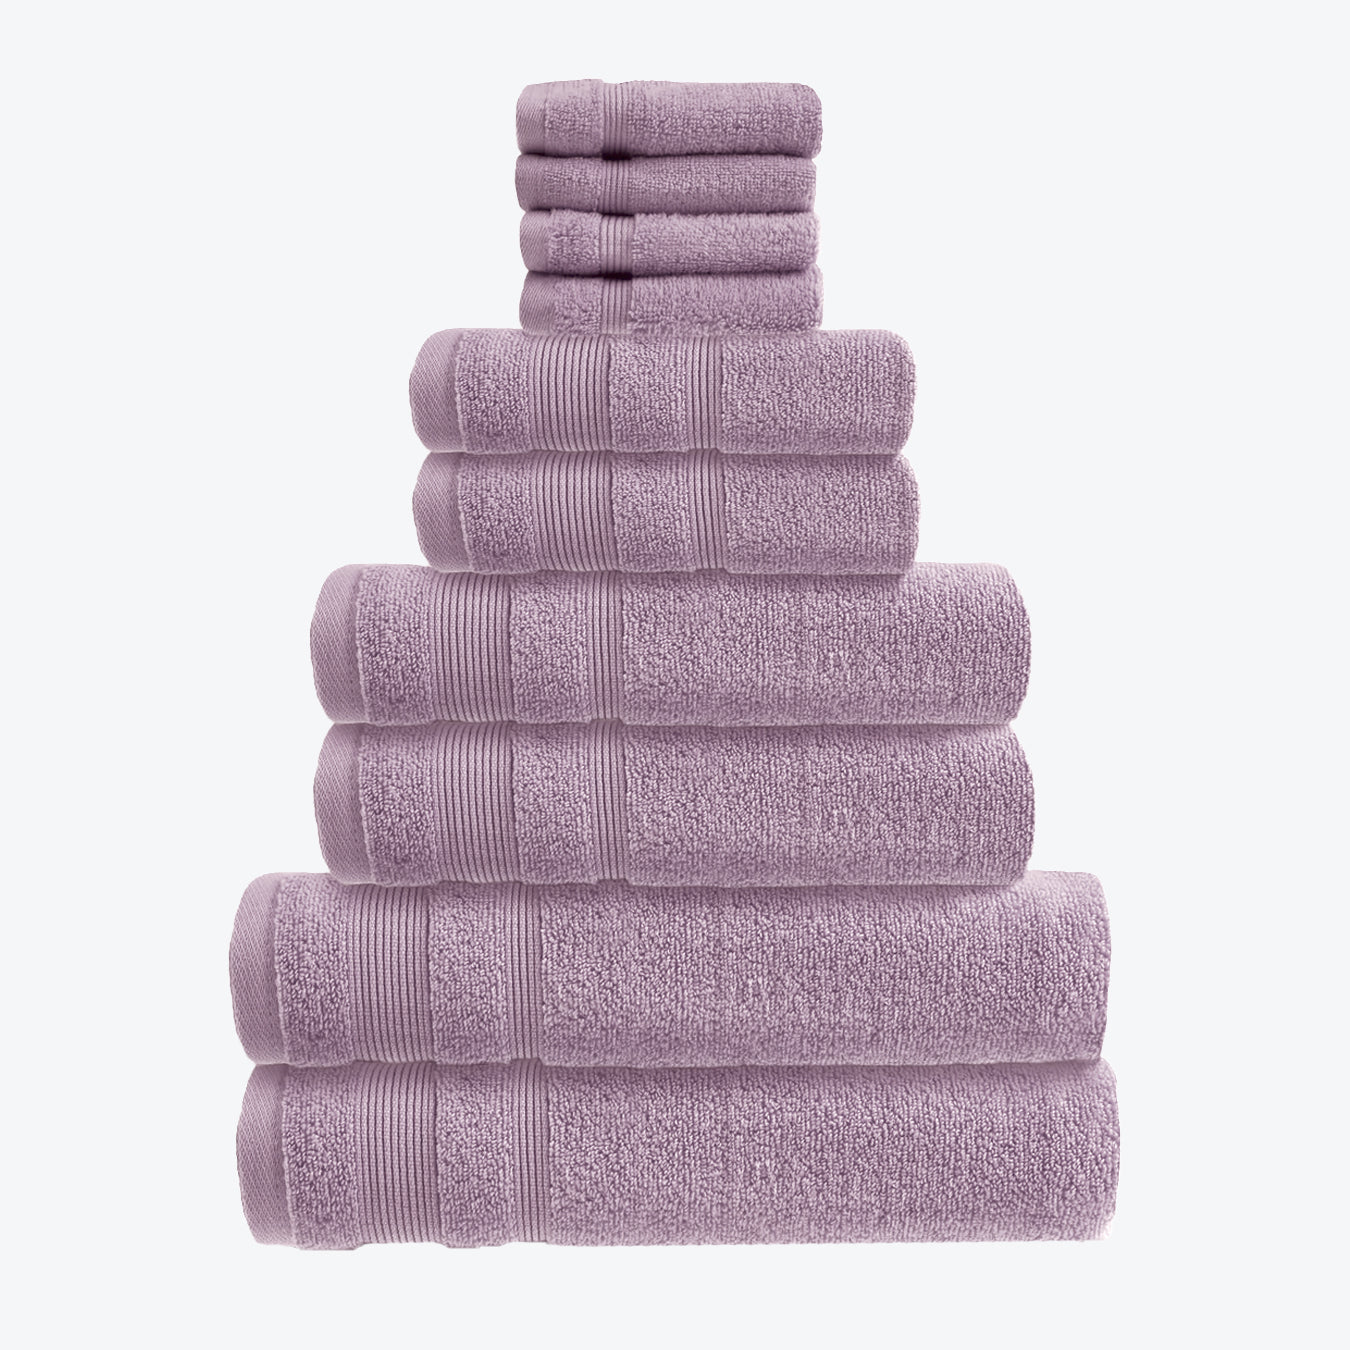 Heather Lilac Zero Twist 10pc Towel Set Egyptian Cotton Bathroom Towel Bale. Hand Towels, Bath Towels, Bath Sheets, and Face Cloths